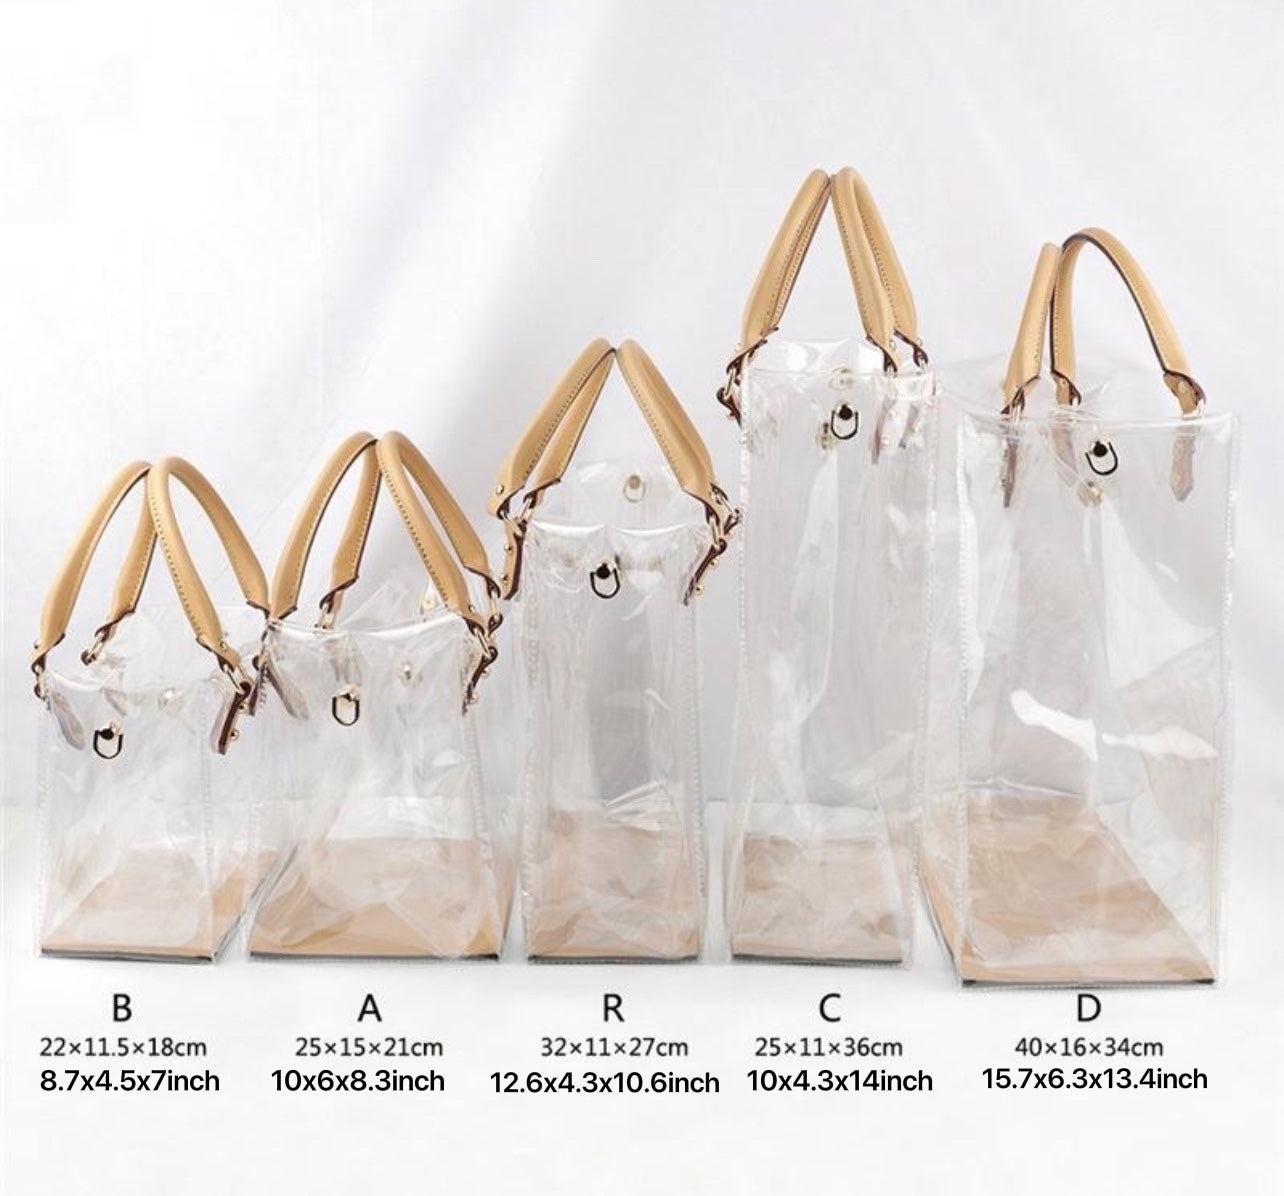 Create a Louis Vuitton PVC Bag With This TikTok DIY